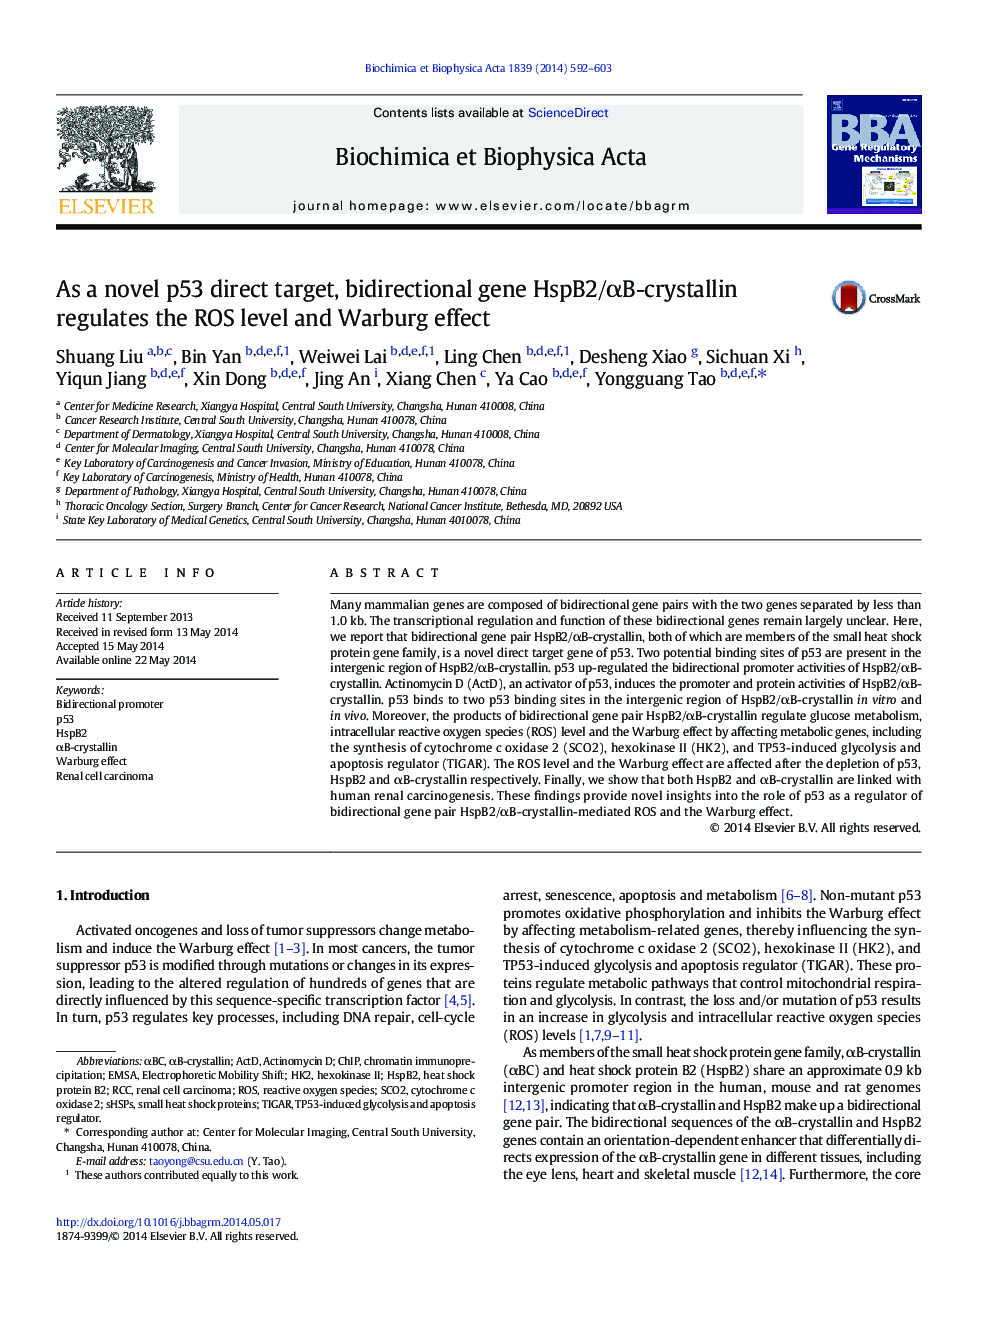 As a novel p53 direct target, bidirectional gene HspB2/Î±B-crystallin regulates the ROS level and Warburg effect